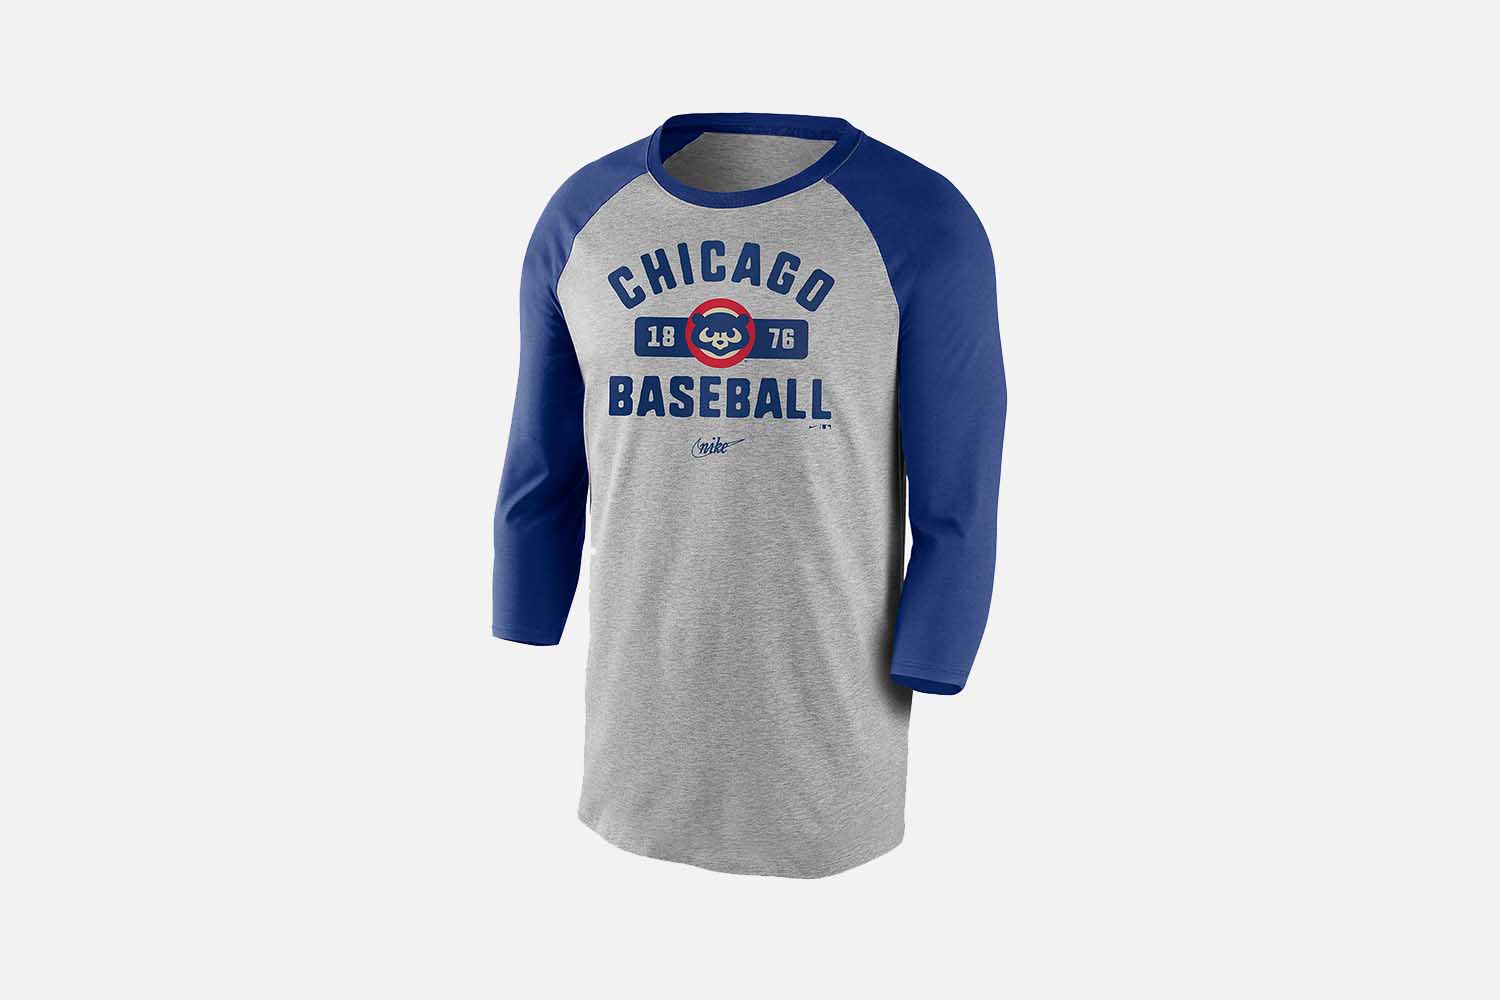 buy baseball t shirt